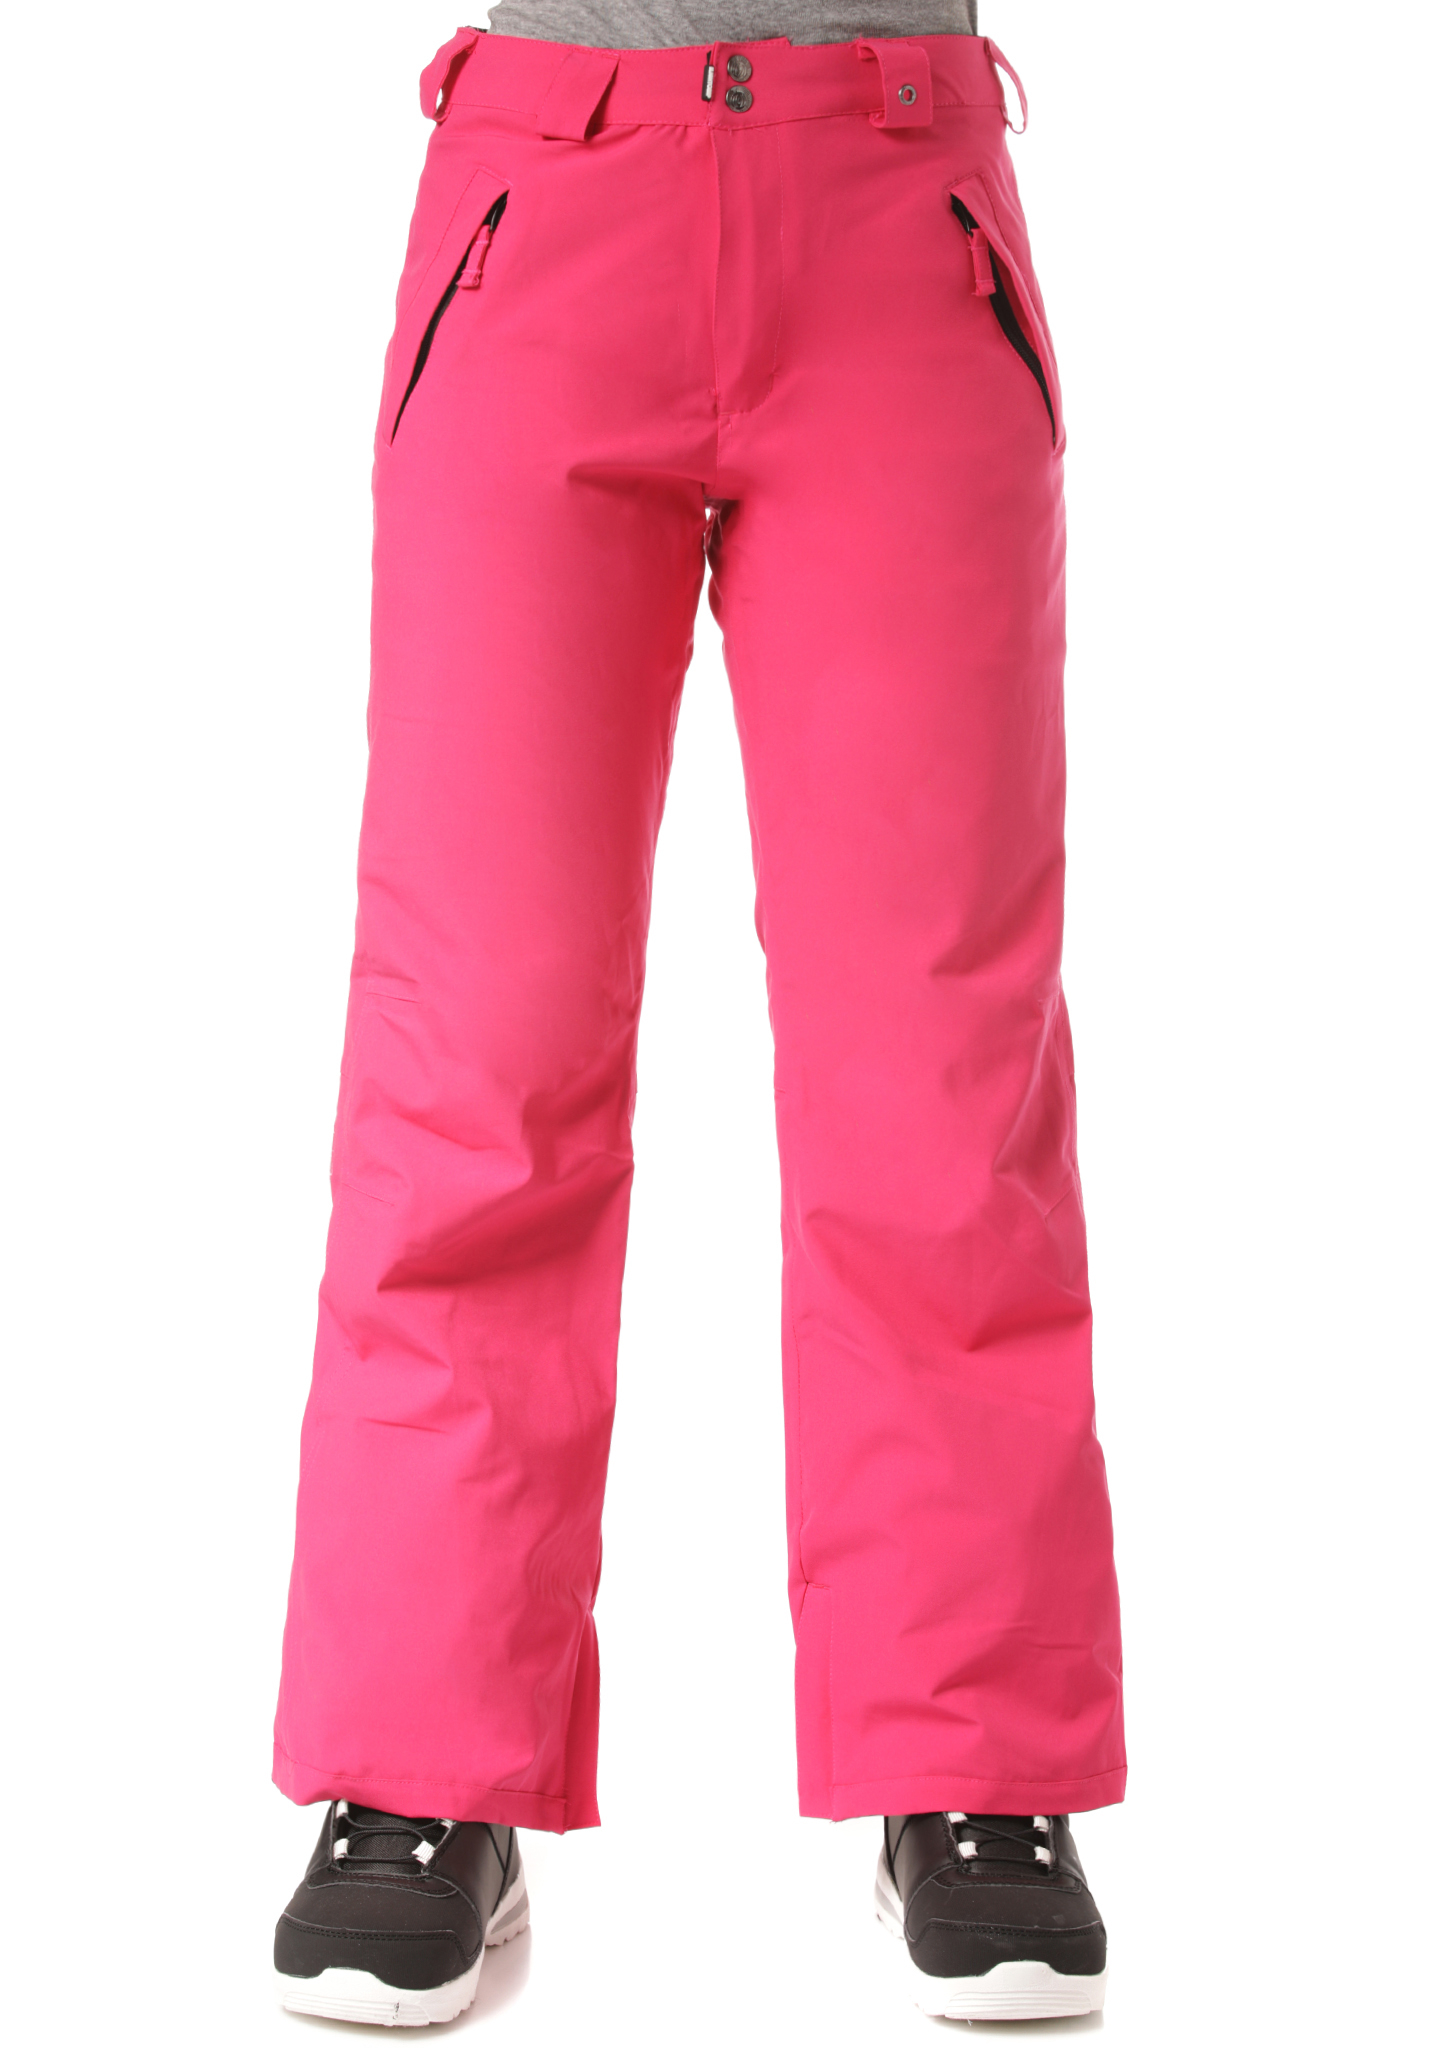 LIGHT Yoko Snowboardhosen pink XS